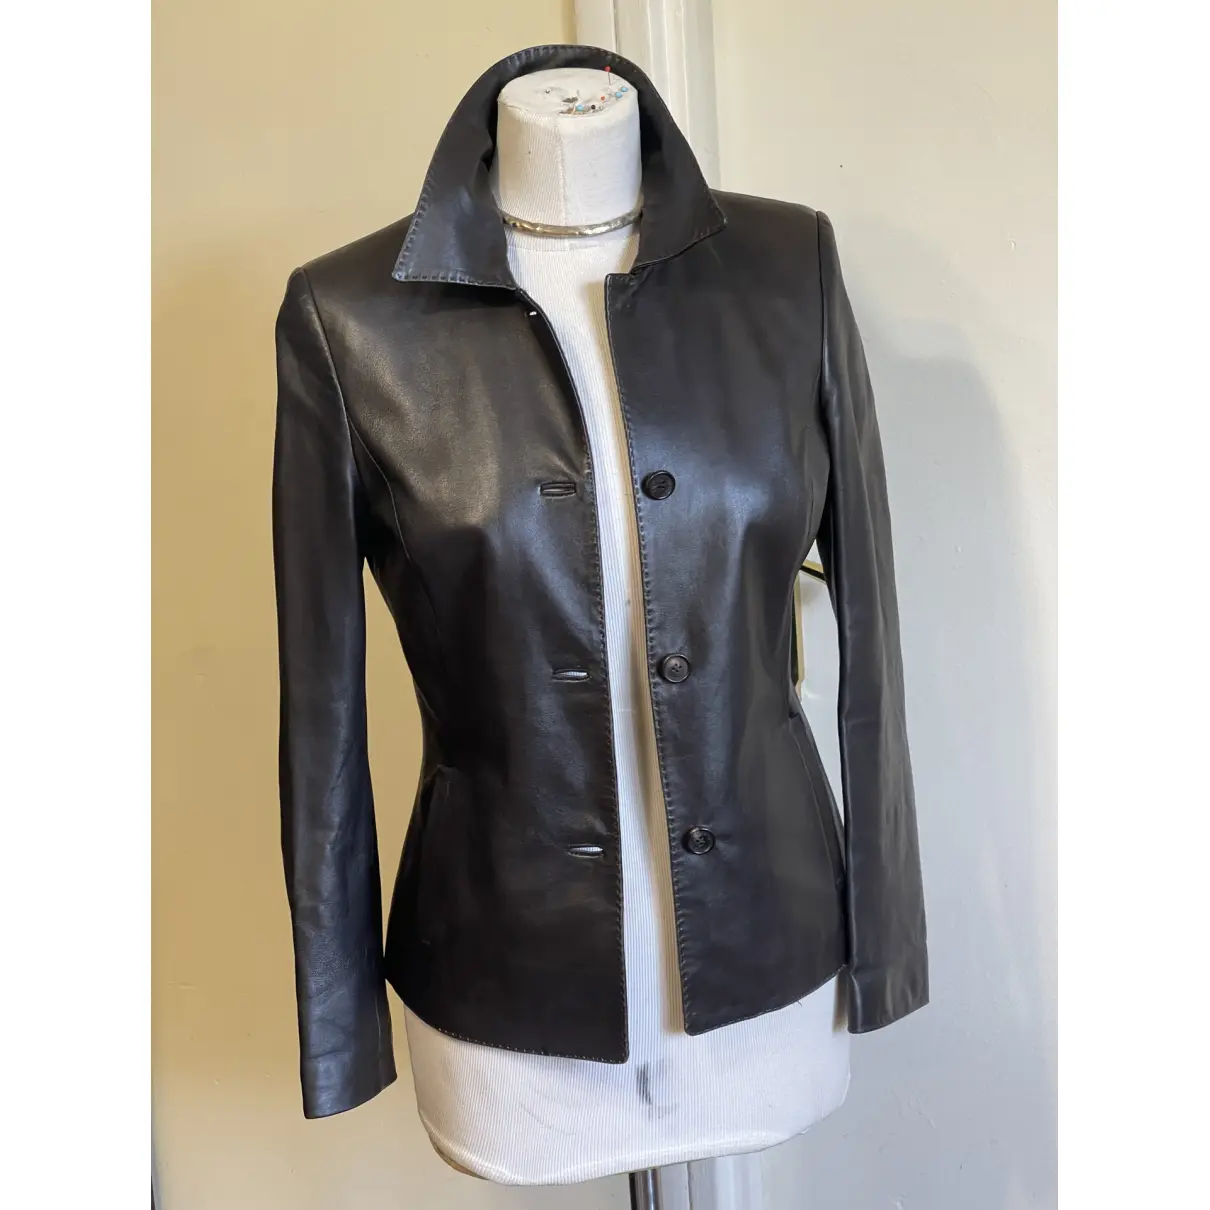 Buy Bally Leather jacket online